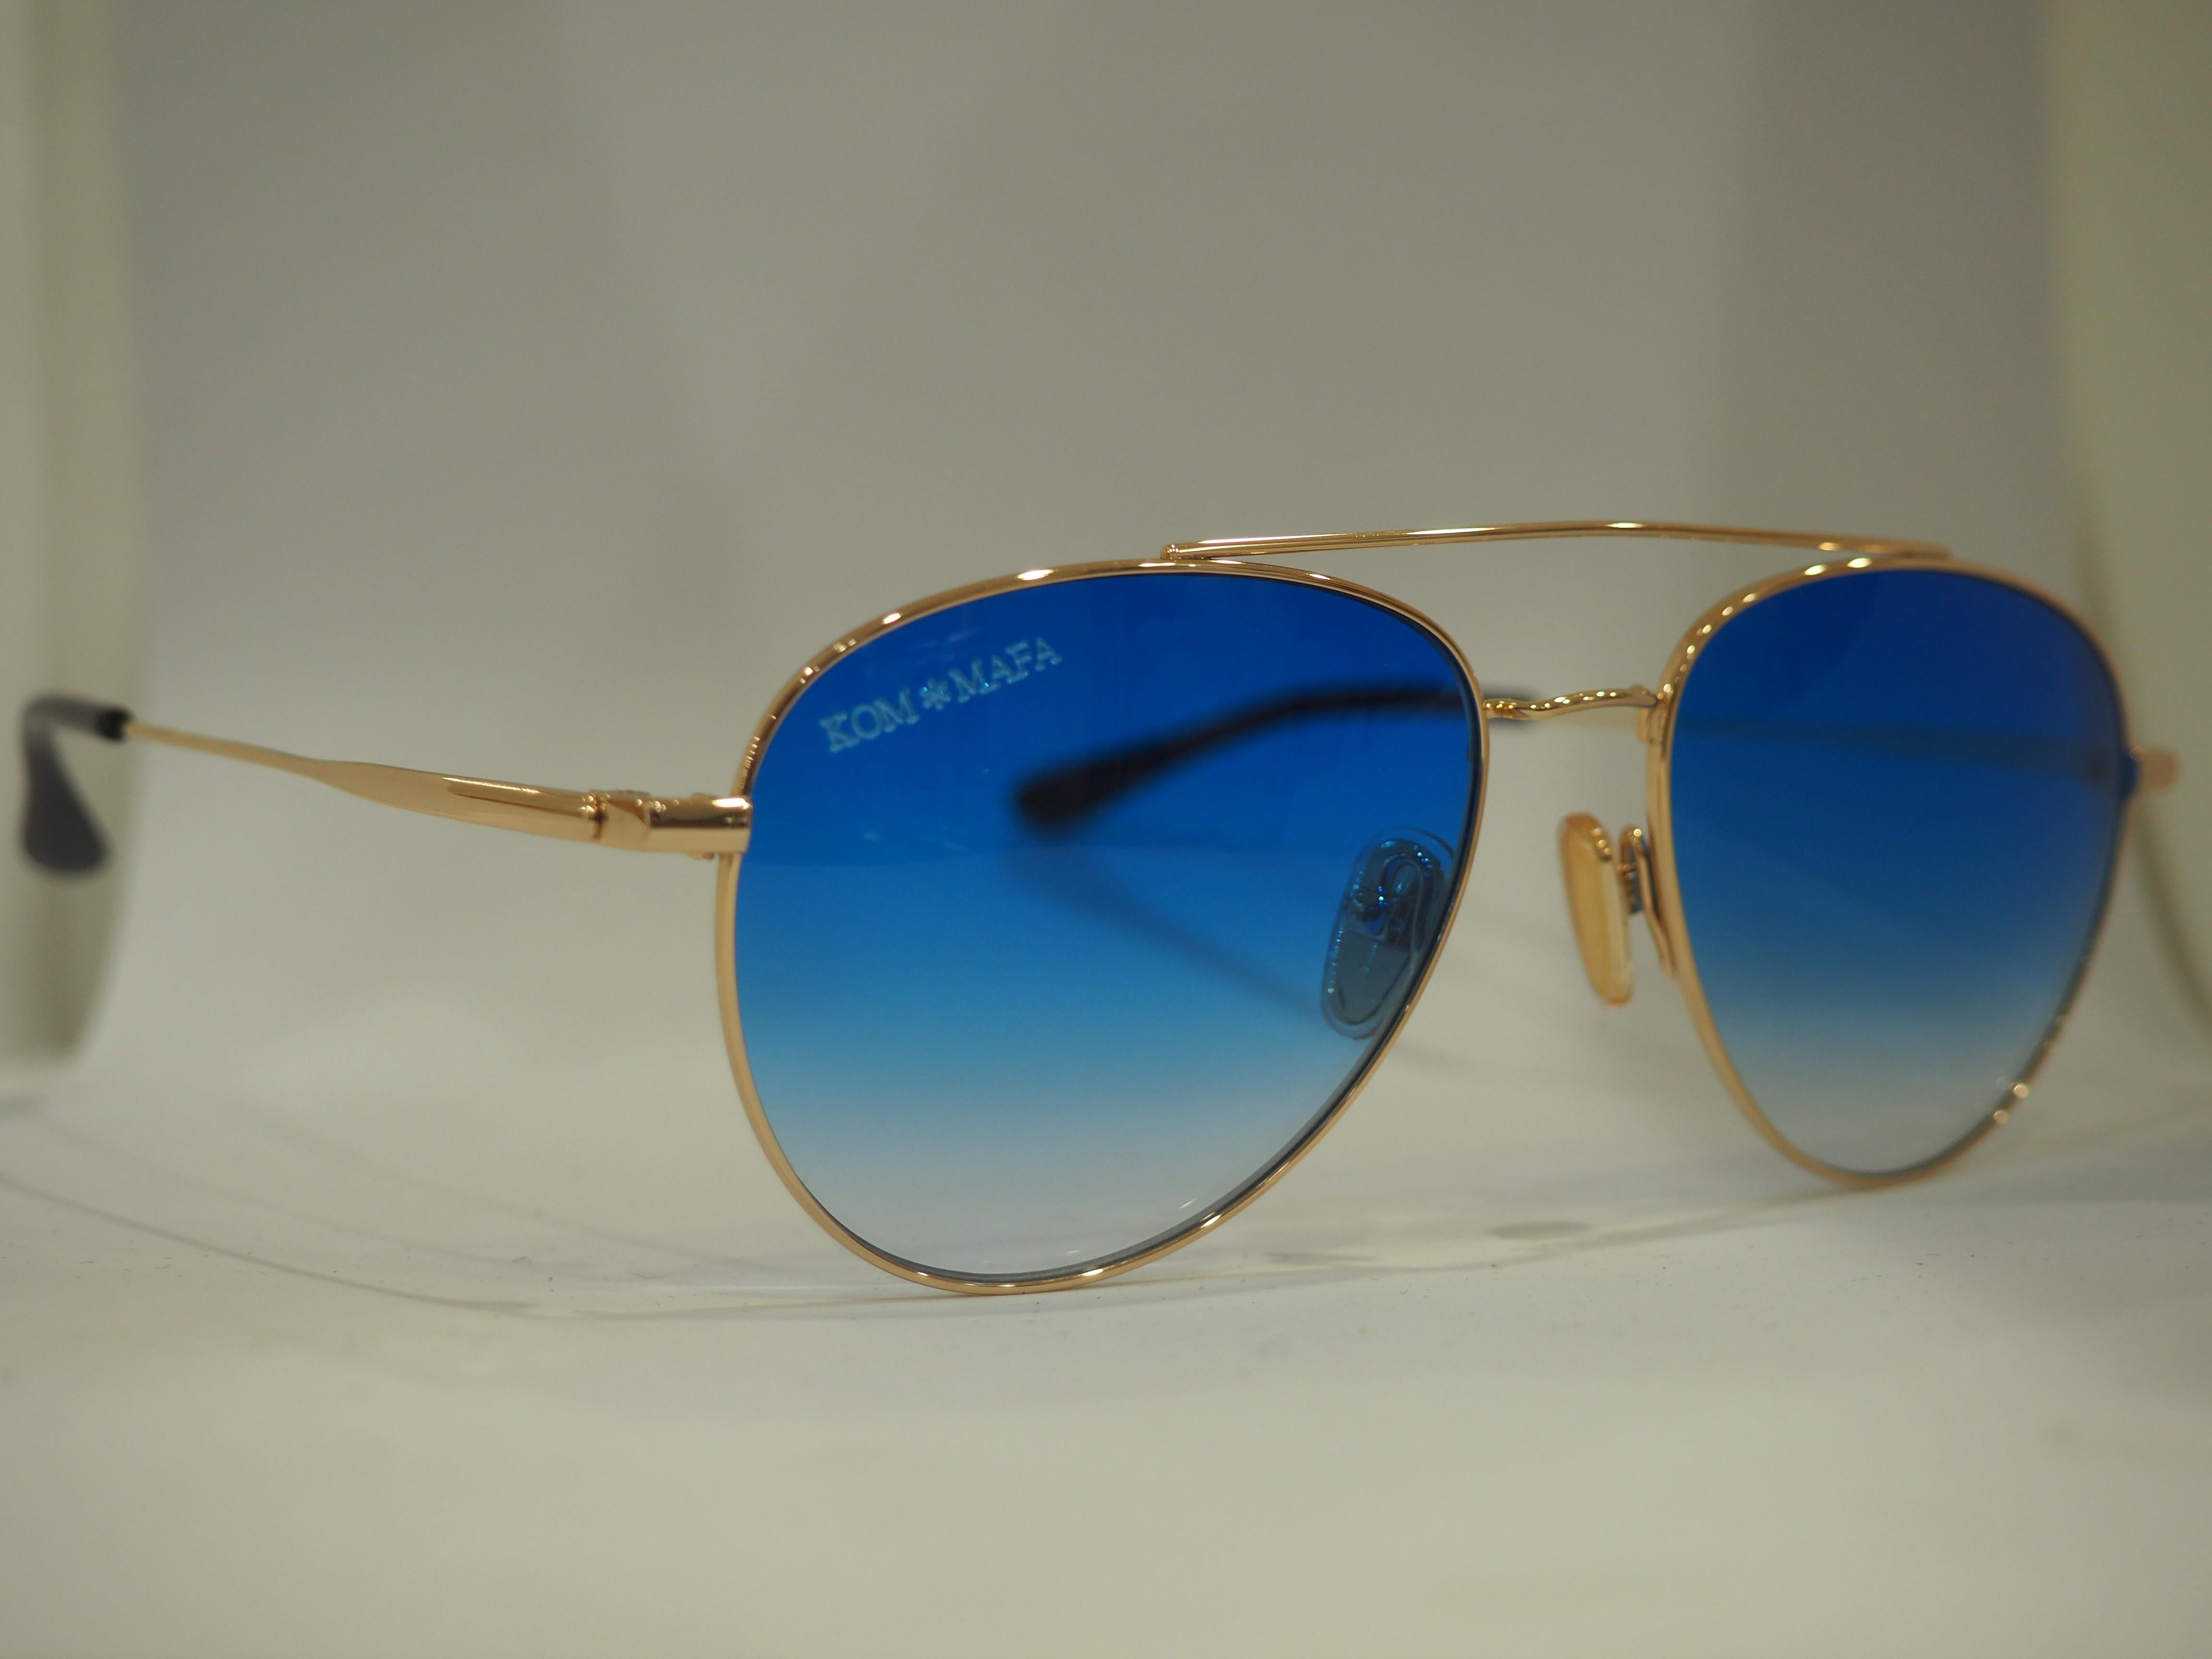 Blue Kommafa blue lens sunglasses